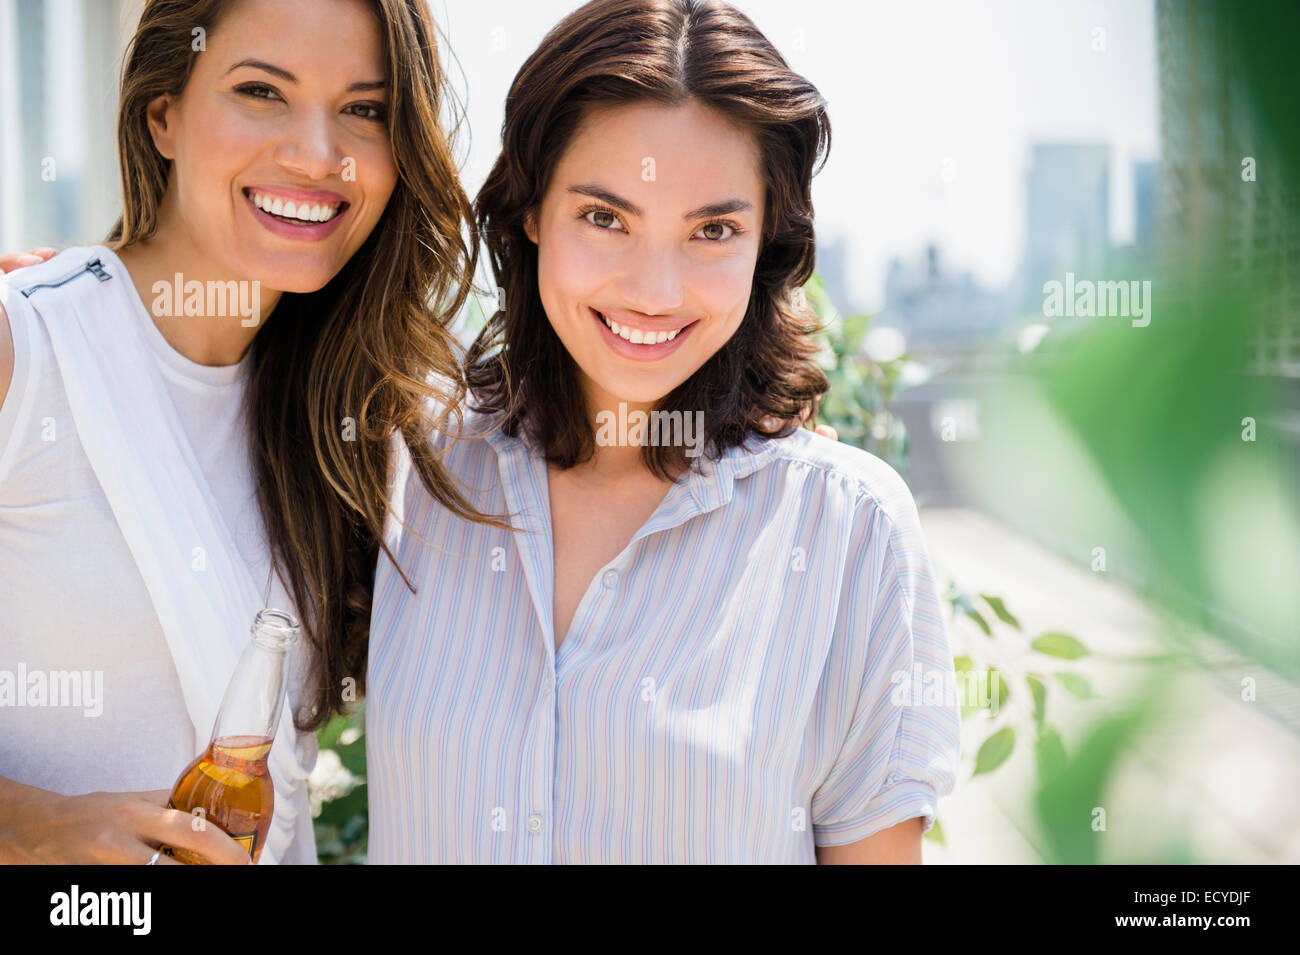 Hispanic women relaxing together outdoors Stock Photo